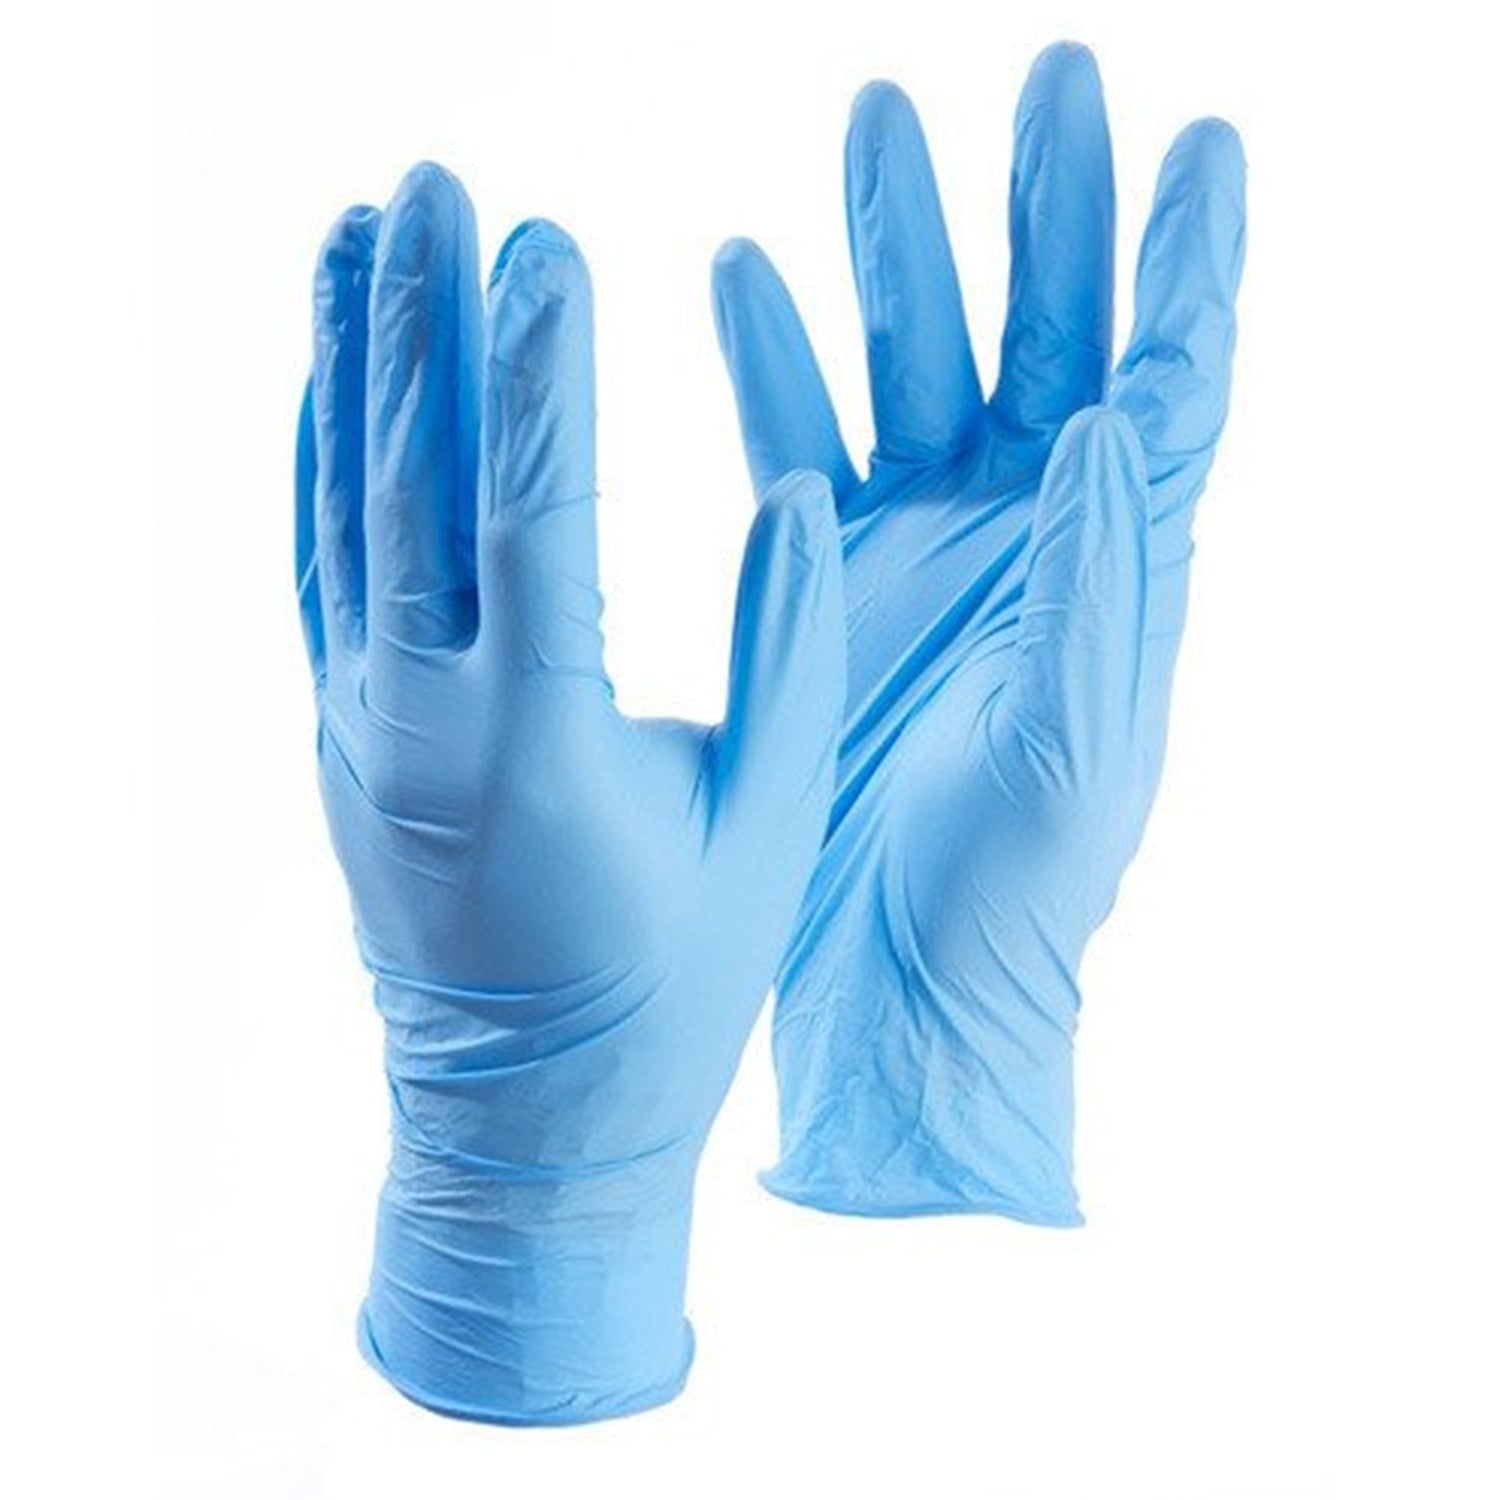 Premier AF Nitrile Examination Gloves | Sterile | Latex Free | XLarge | Pack of 50 Pairs (5)